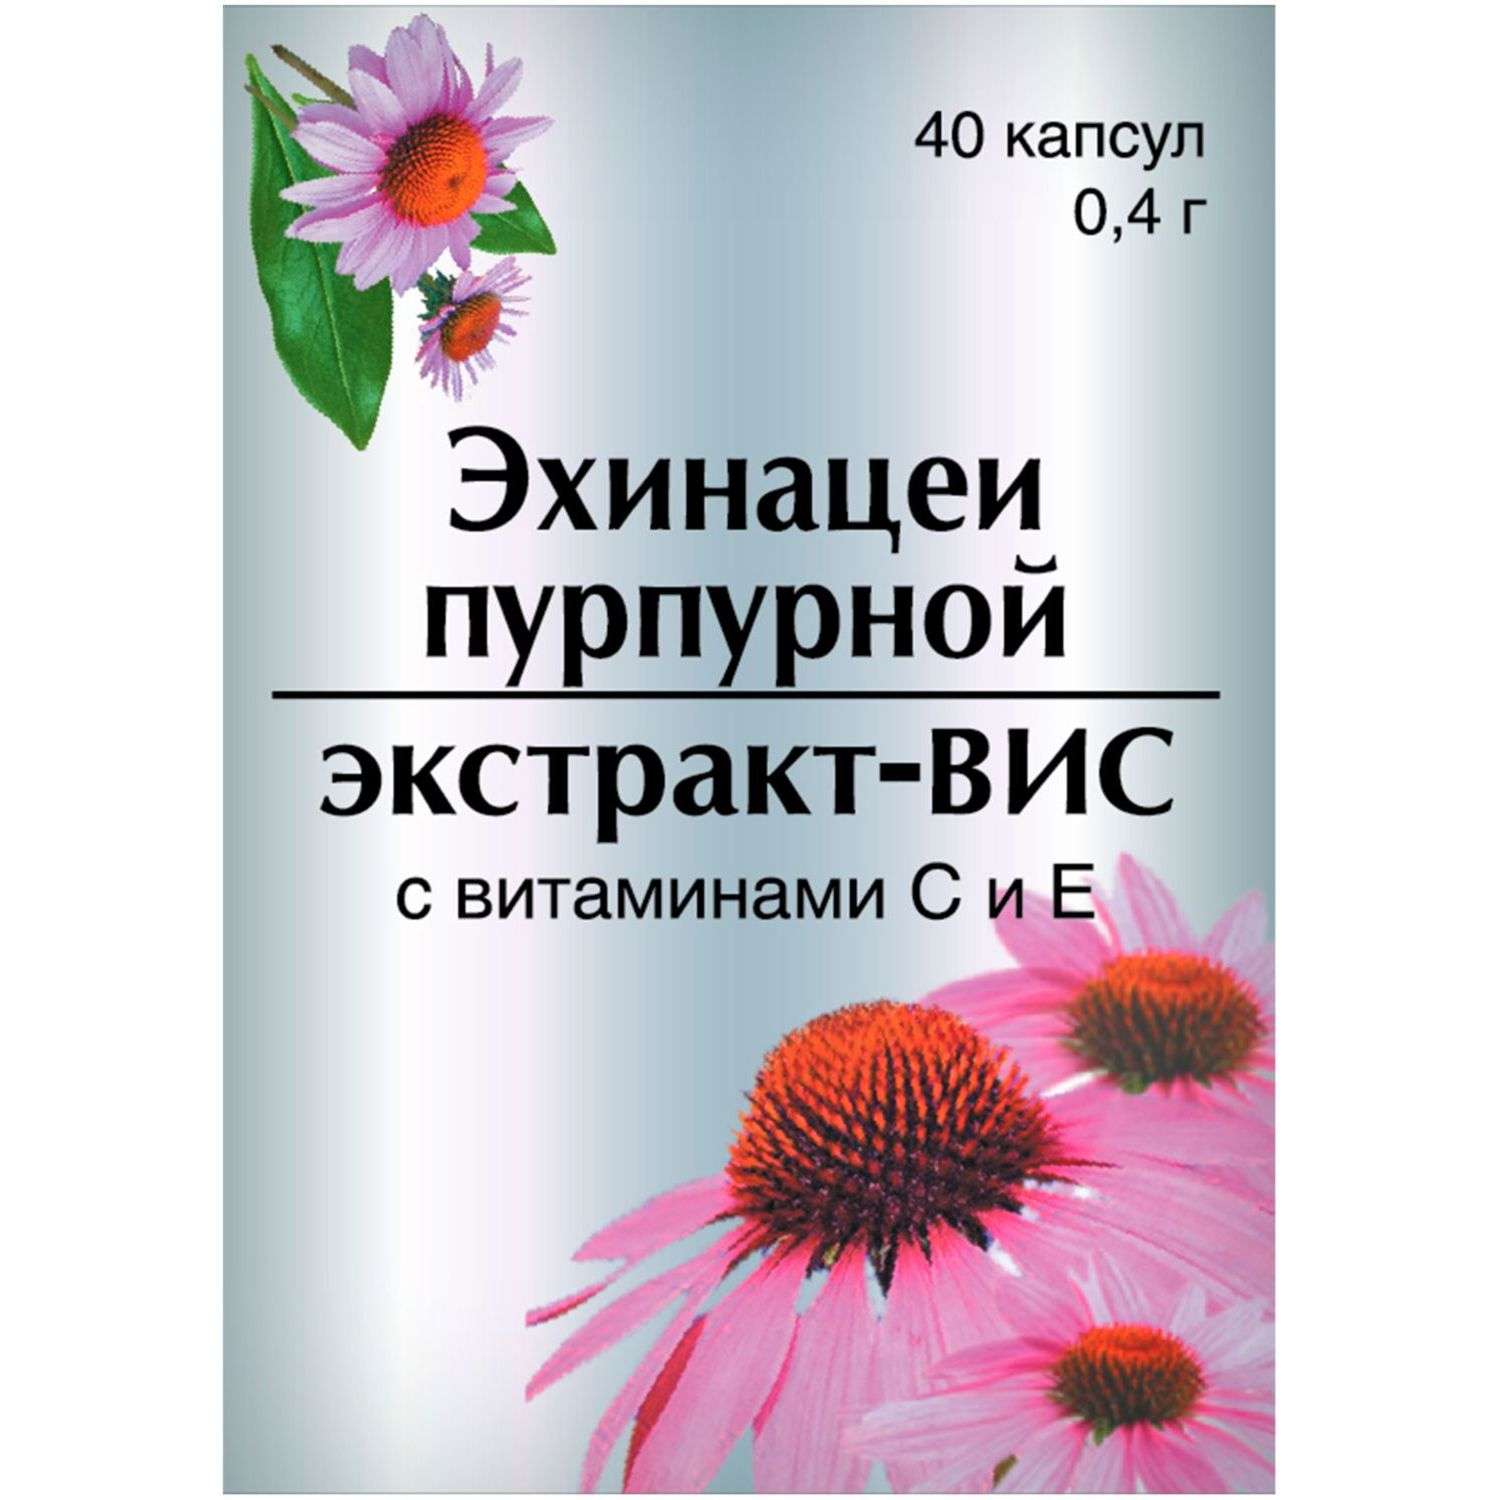 Экстракт-ВИС Эхинацеи пурпурной с витаминами С и Е 40капсул - фото 2